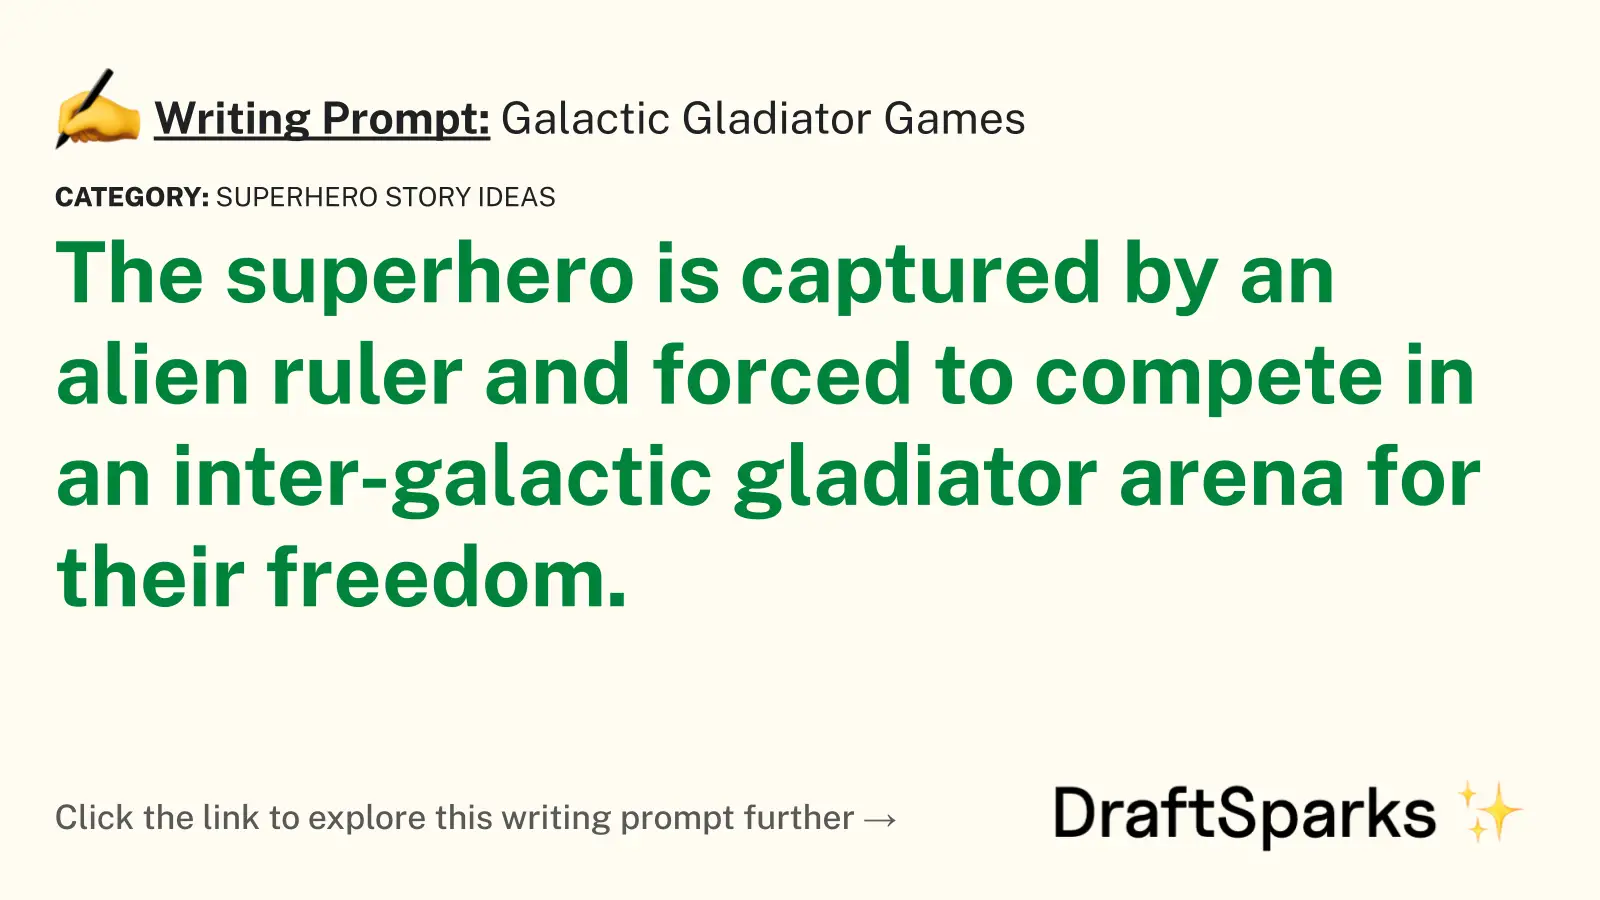 Galactic Gladiator Games